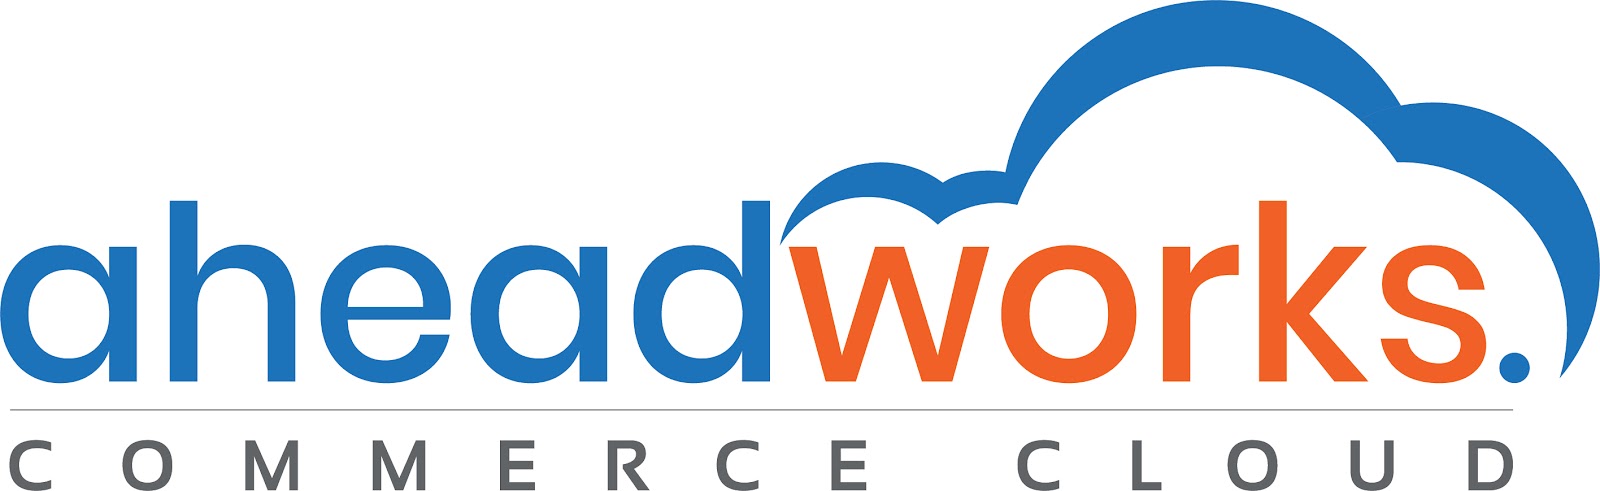 Aheadworks Commerce Cloud